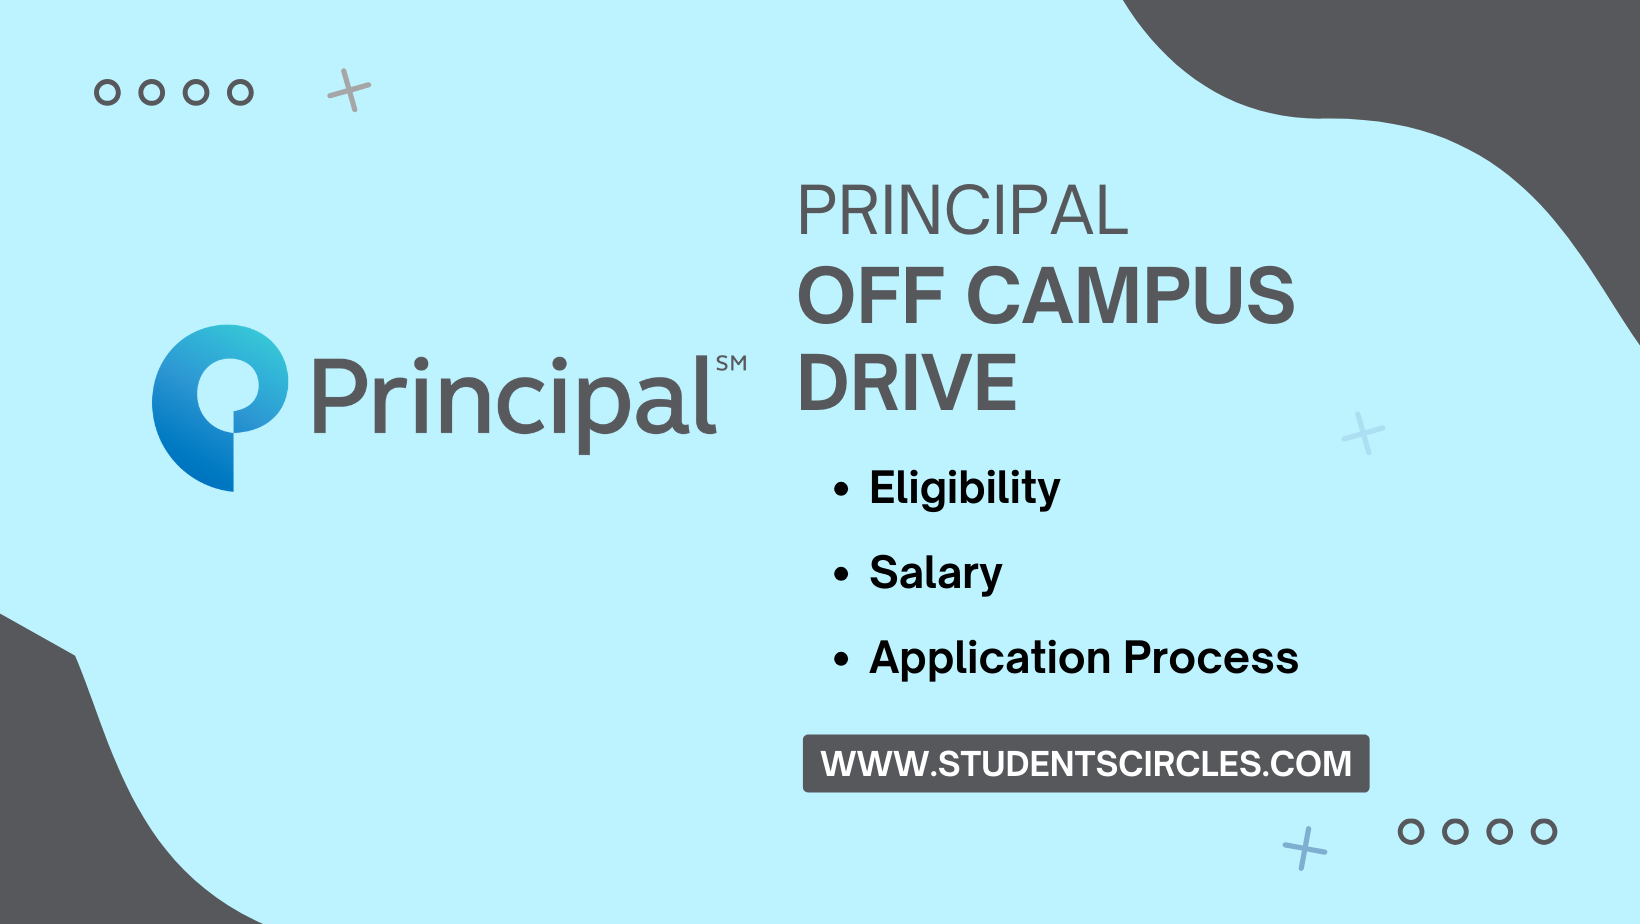 Principal Financial Off Campus Drive